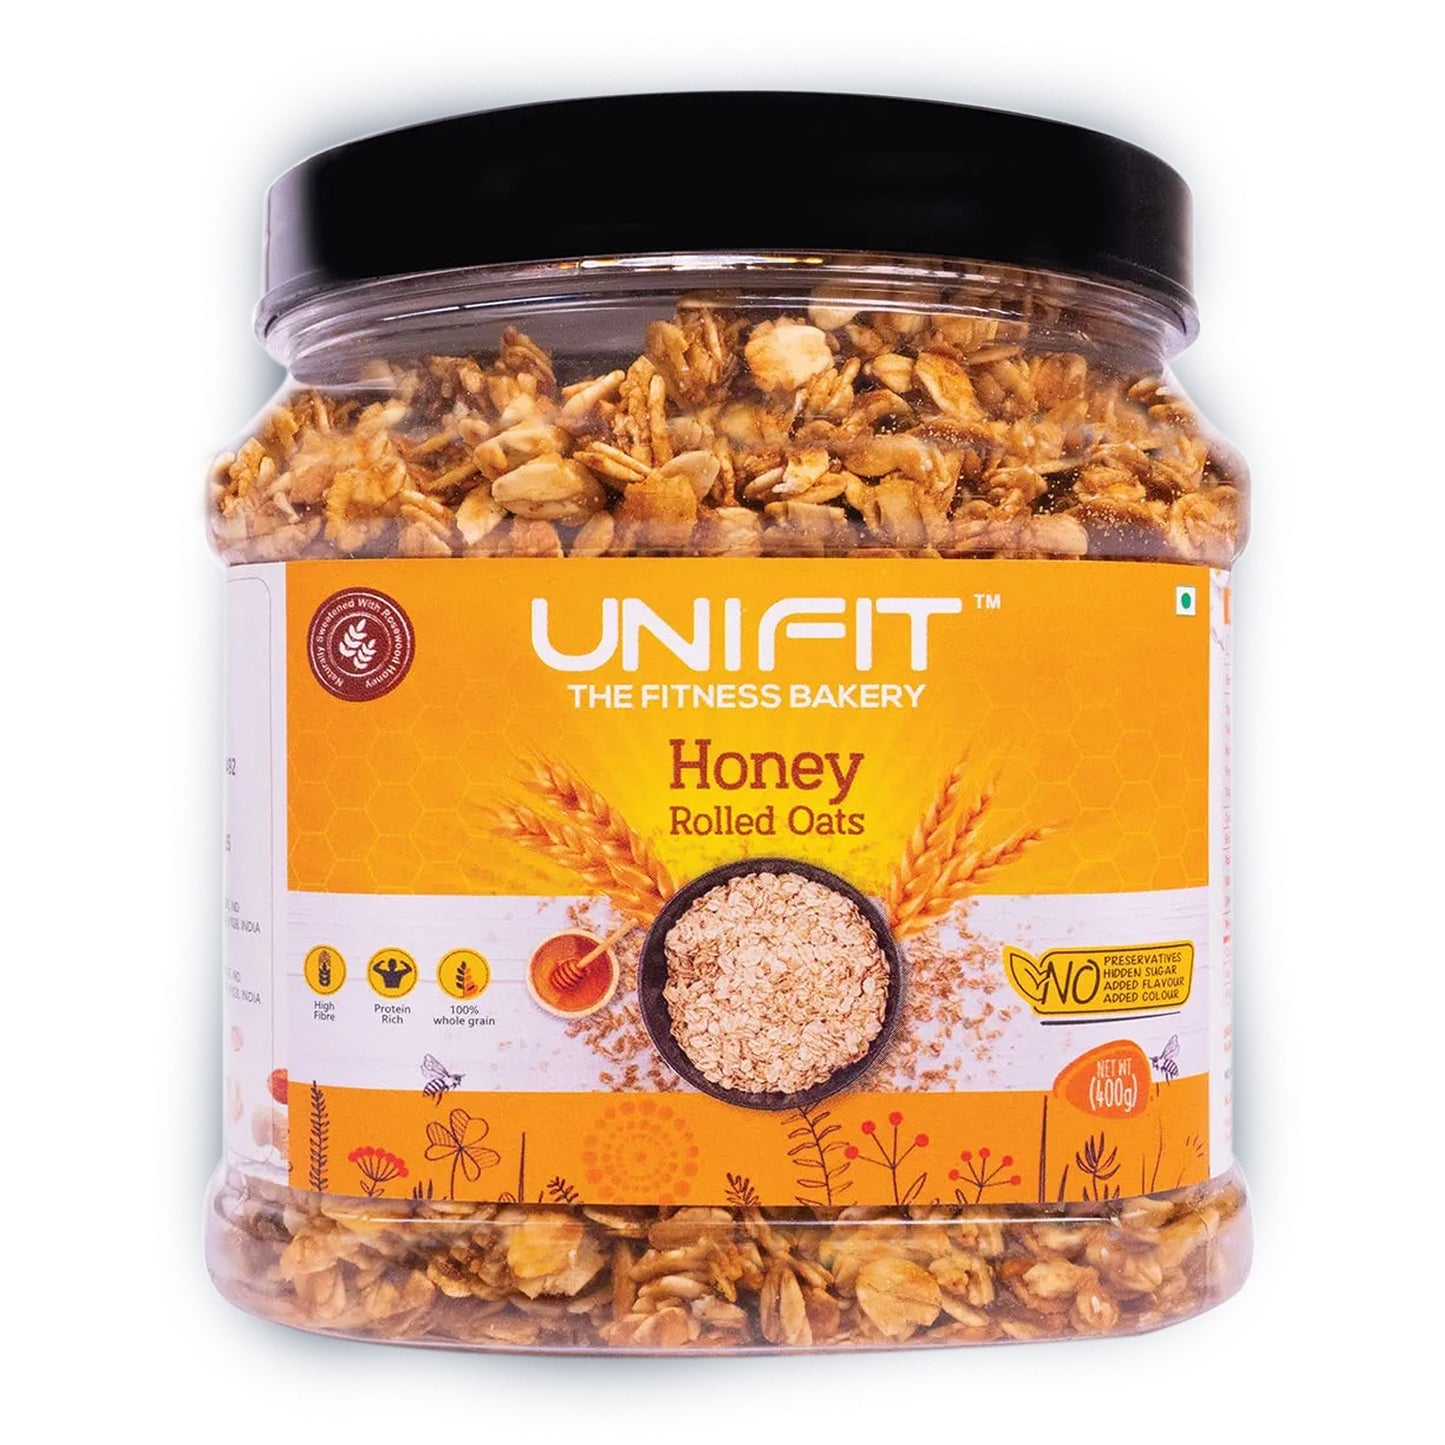 UNIFIT Honey Rolled Oats 400g